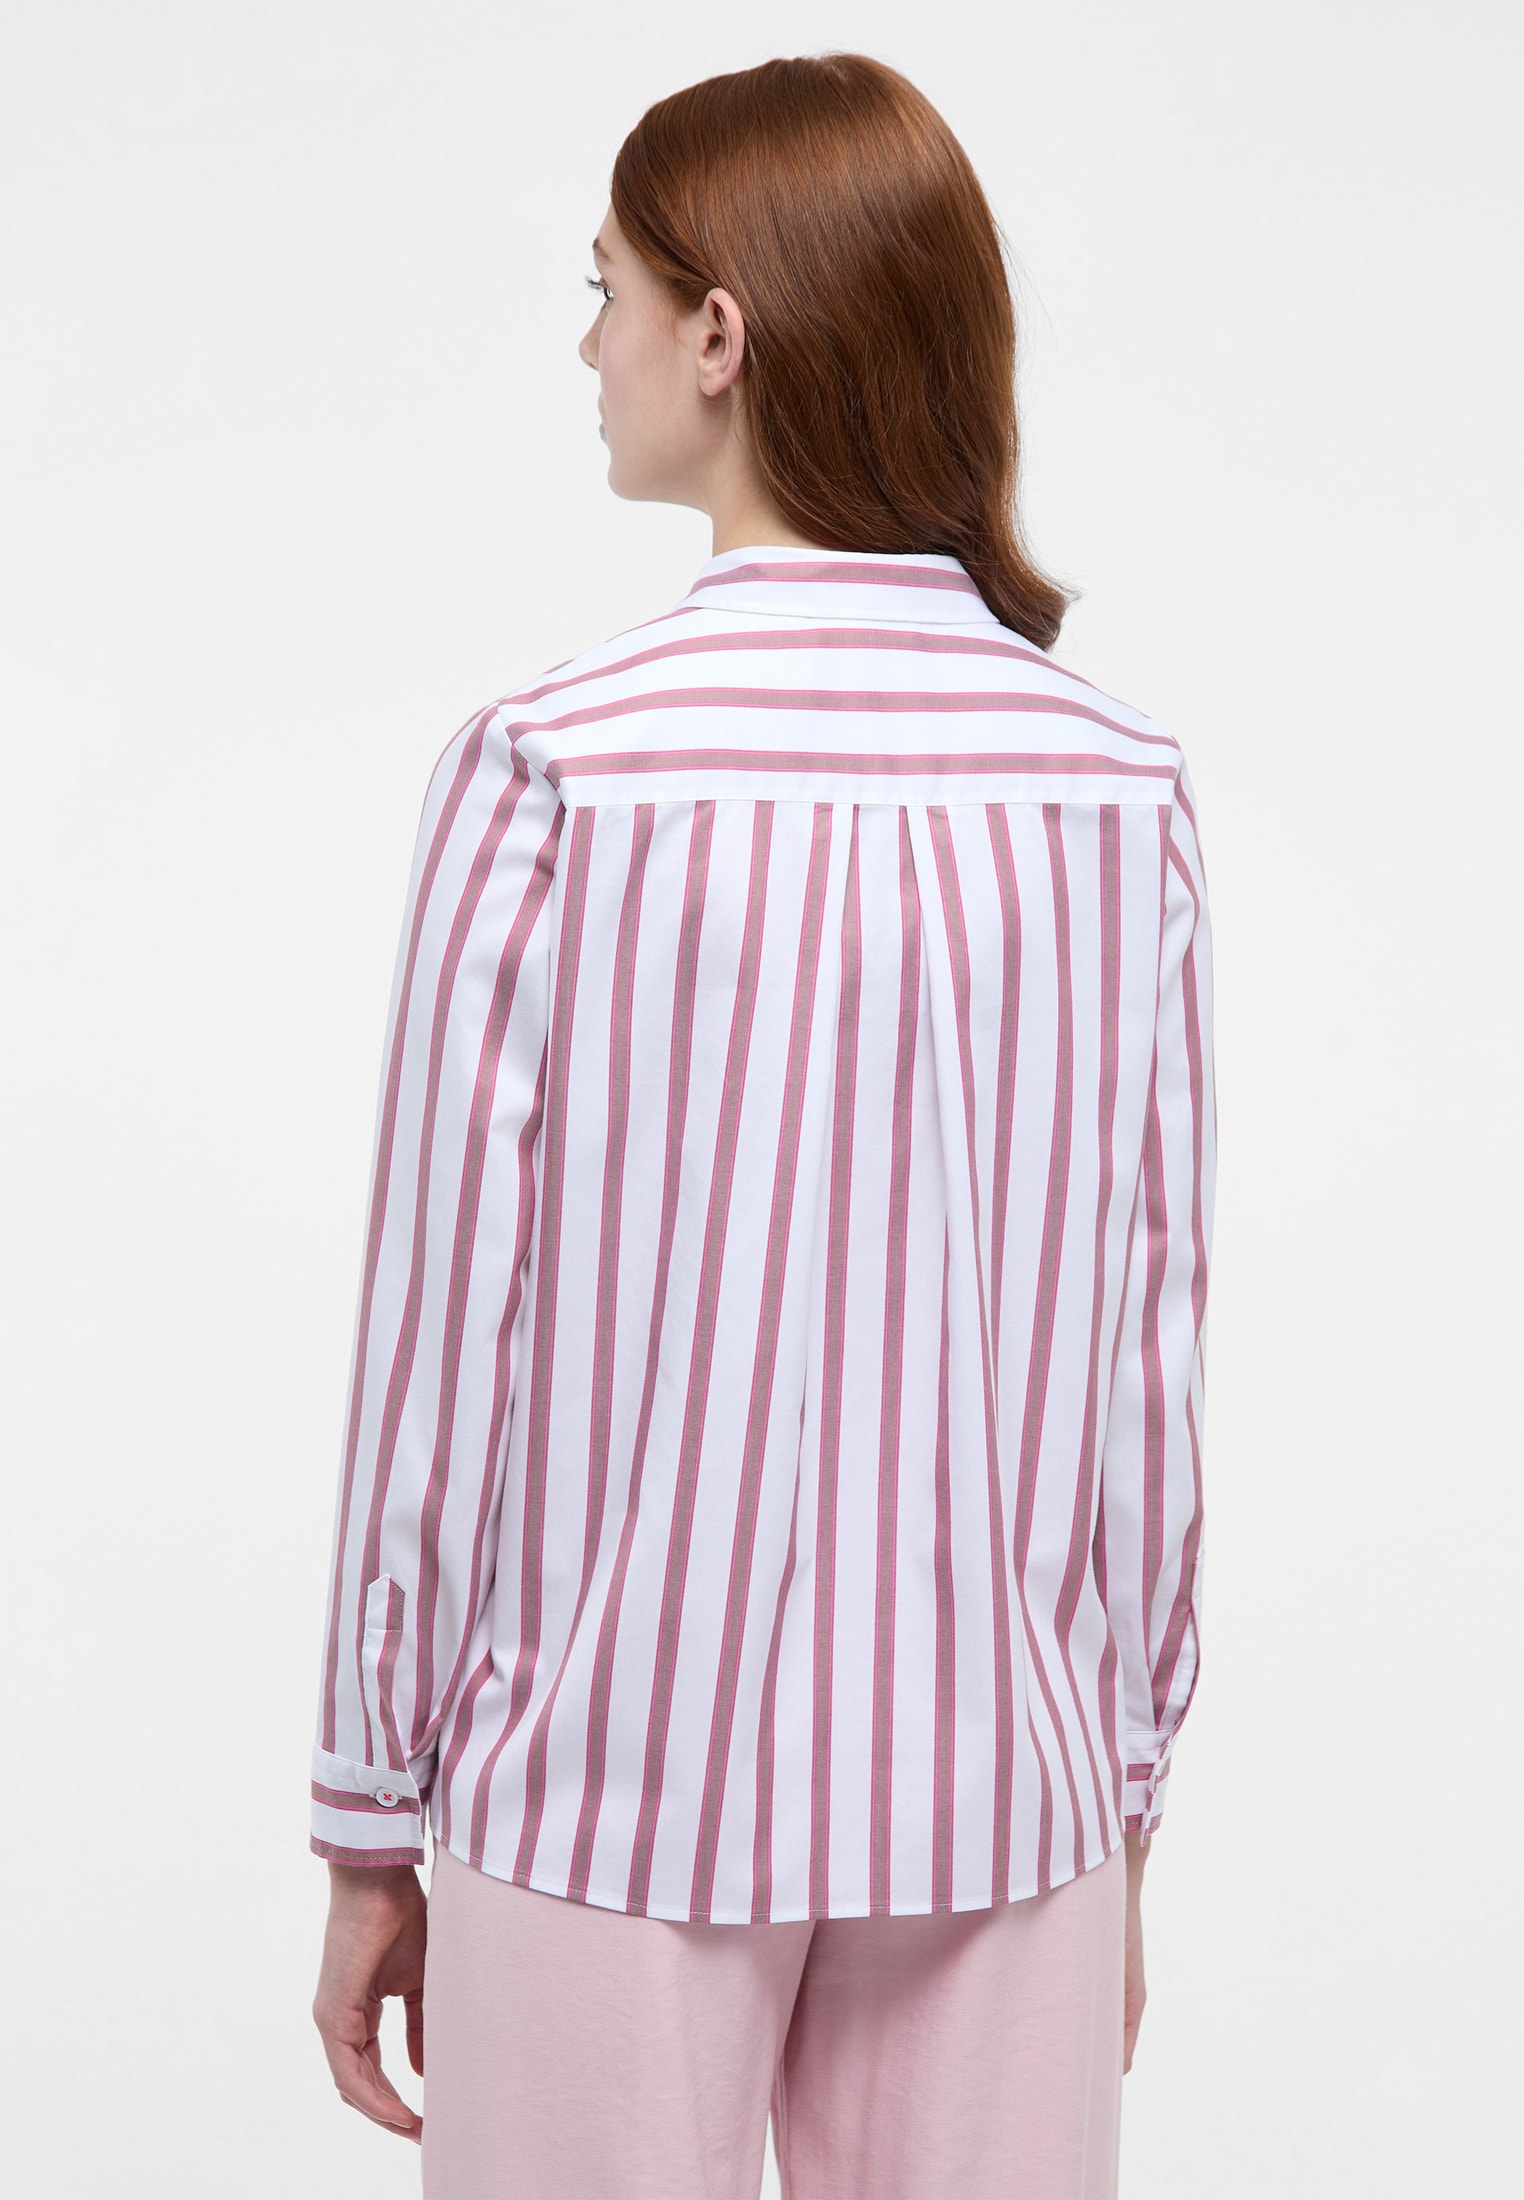 gestreift pink | Shirt 46 in | Bluse | 2BL04213-15-21-46-1/1 pink | Luxury Soft Langarm